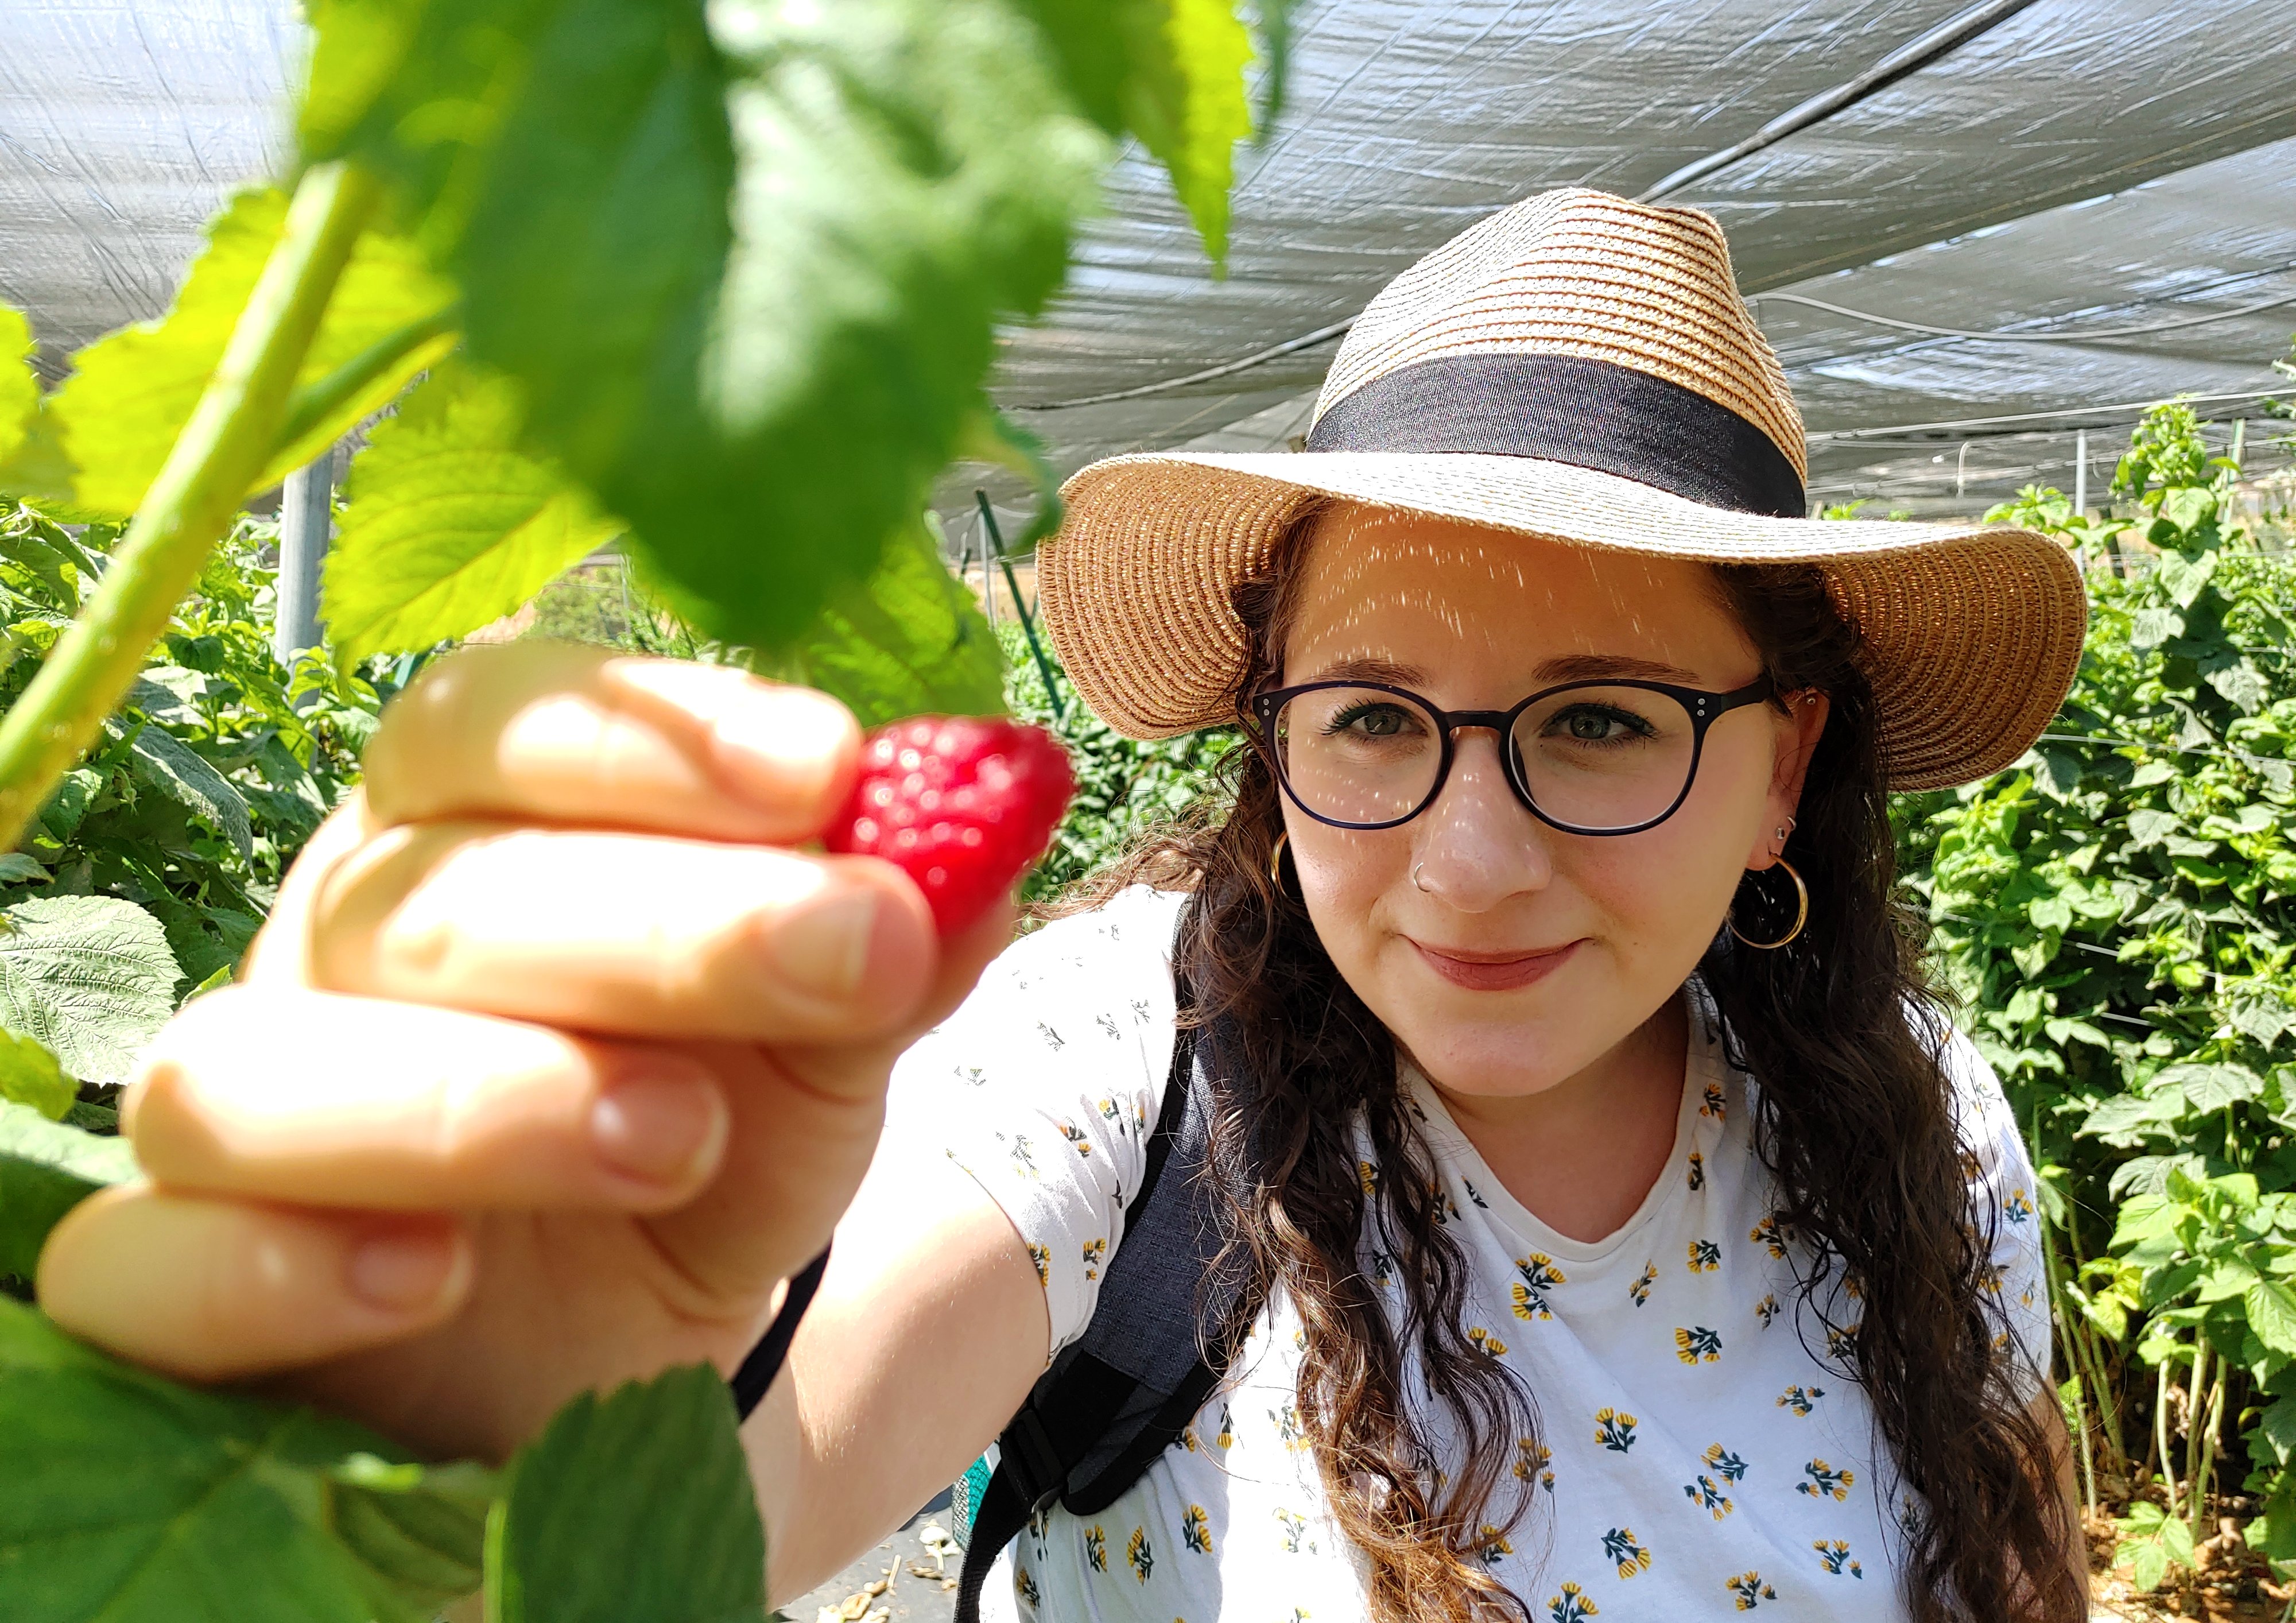 Bracha finding a choice raspberry